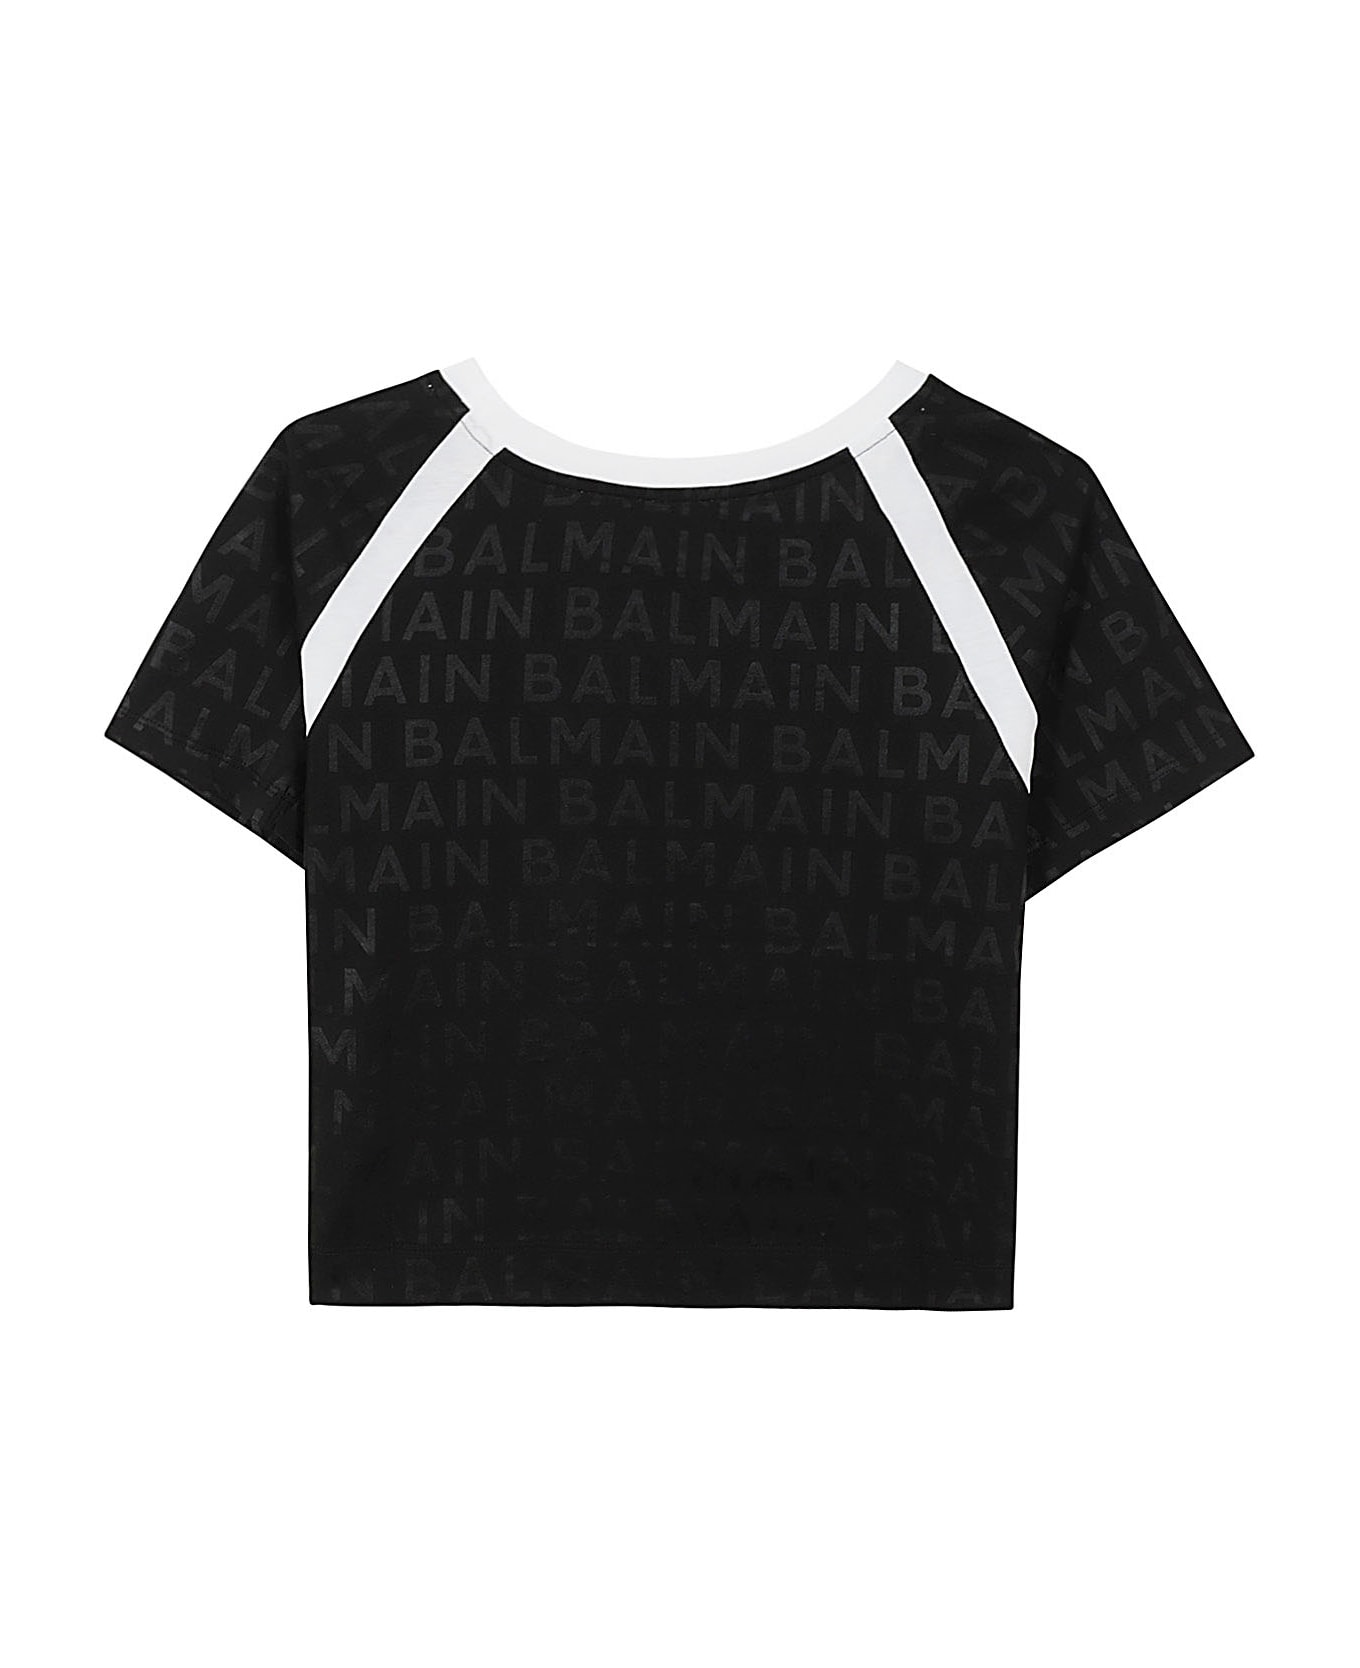 Balmain T Shirt - Calça Sarja Polo Ralph Lauren Chino Bolsos Bege